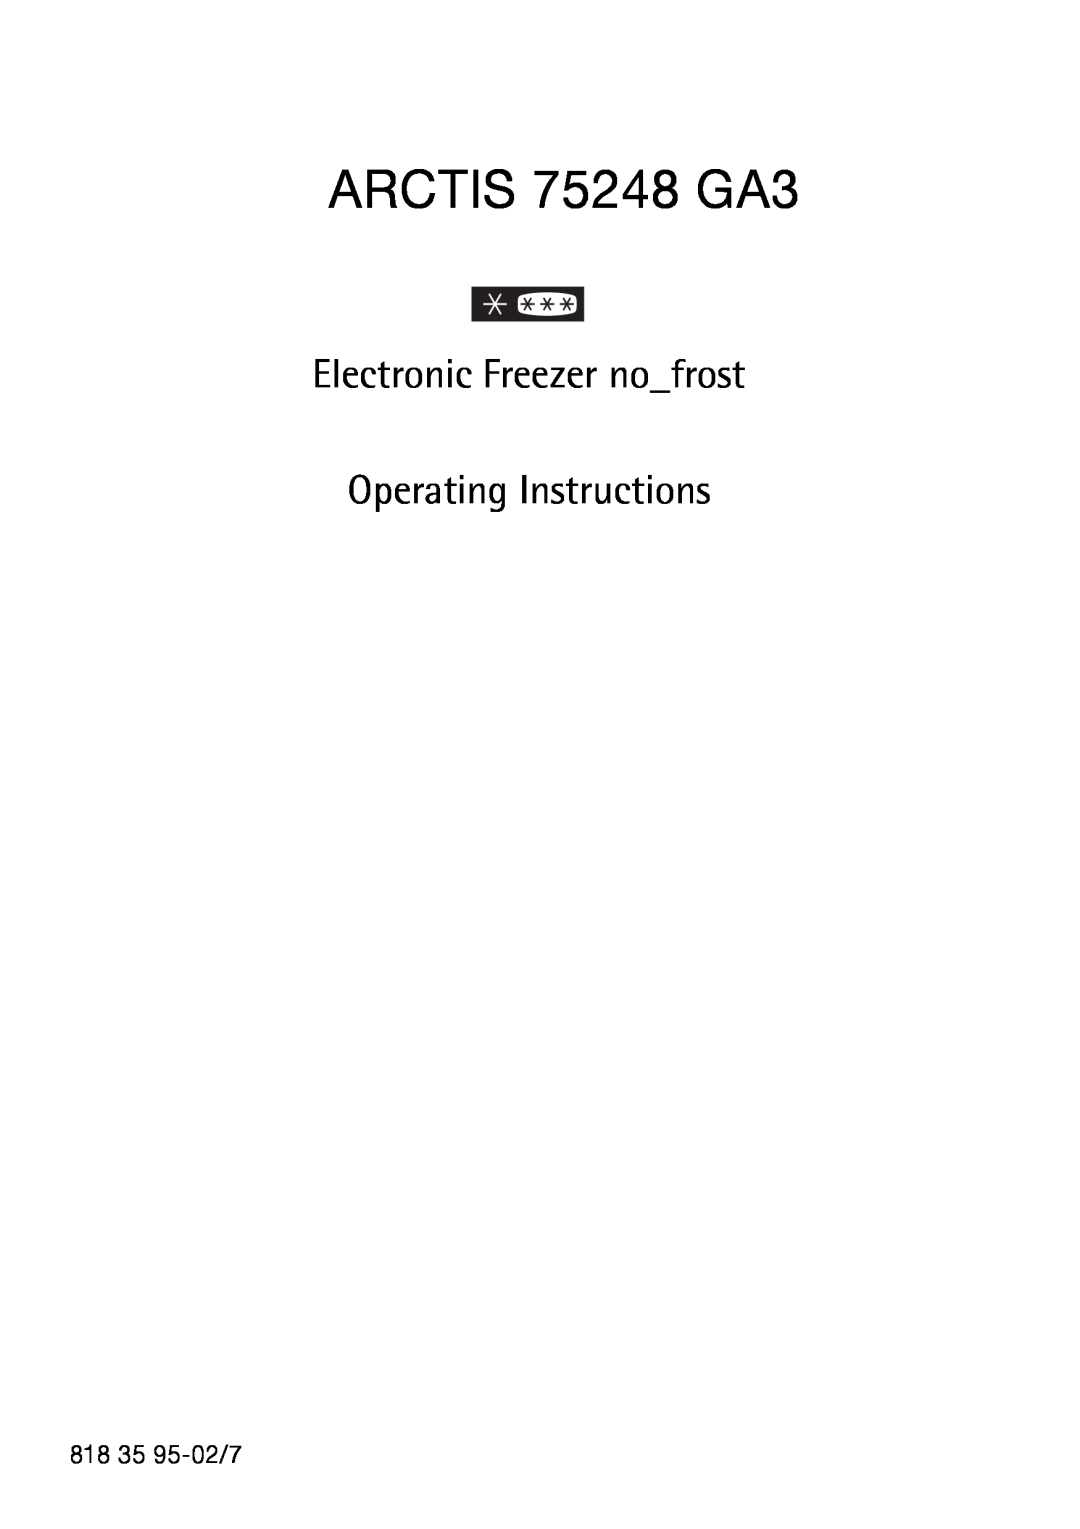 AEG S75578KG3 manual ARCTIS 75248 GA3, Electronic Freezer nofrost Operating Instructions 